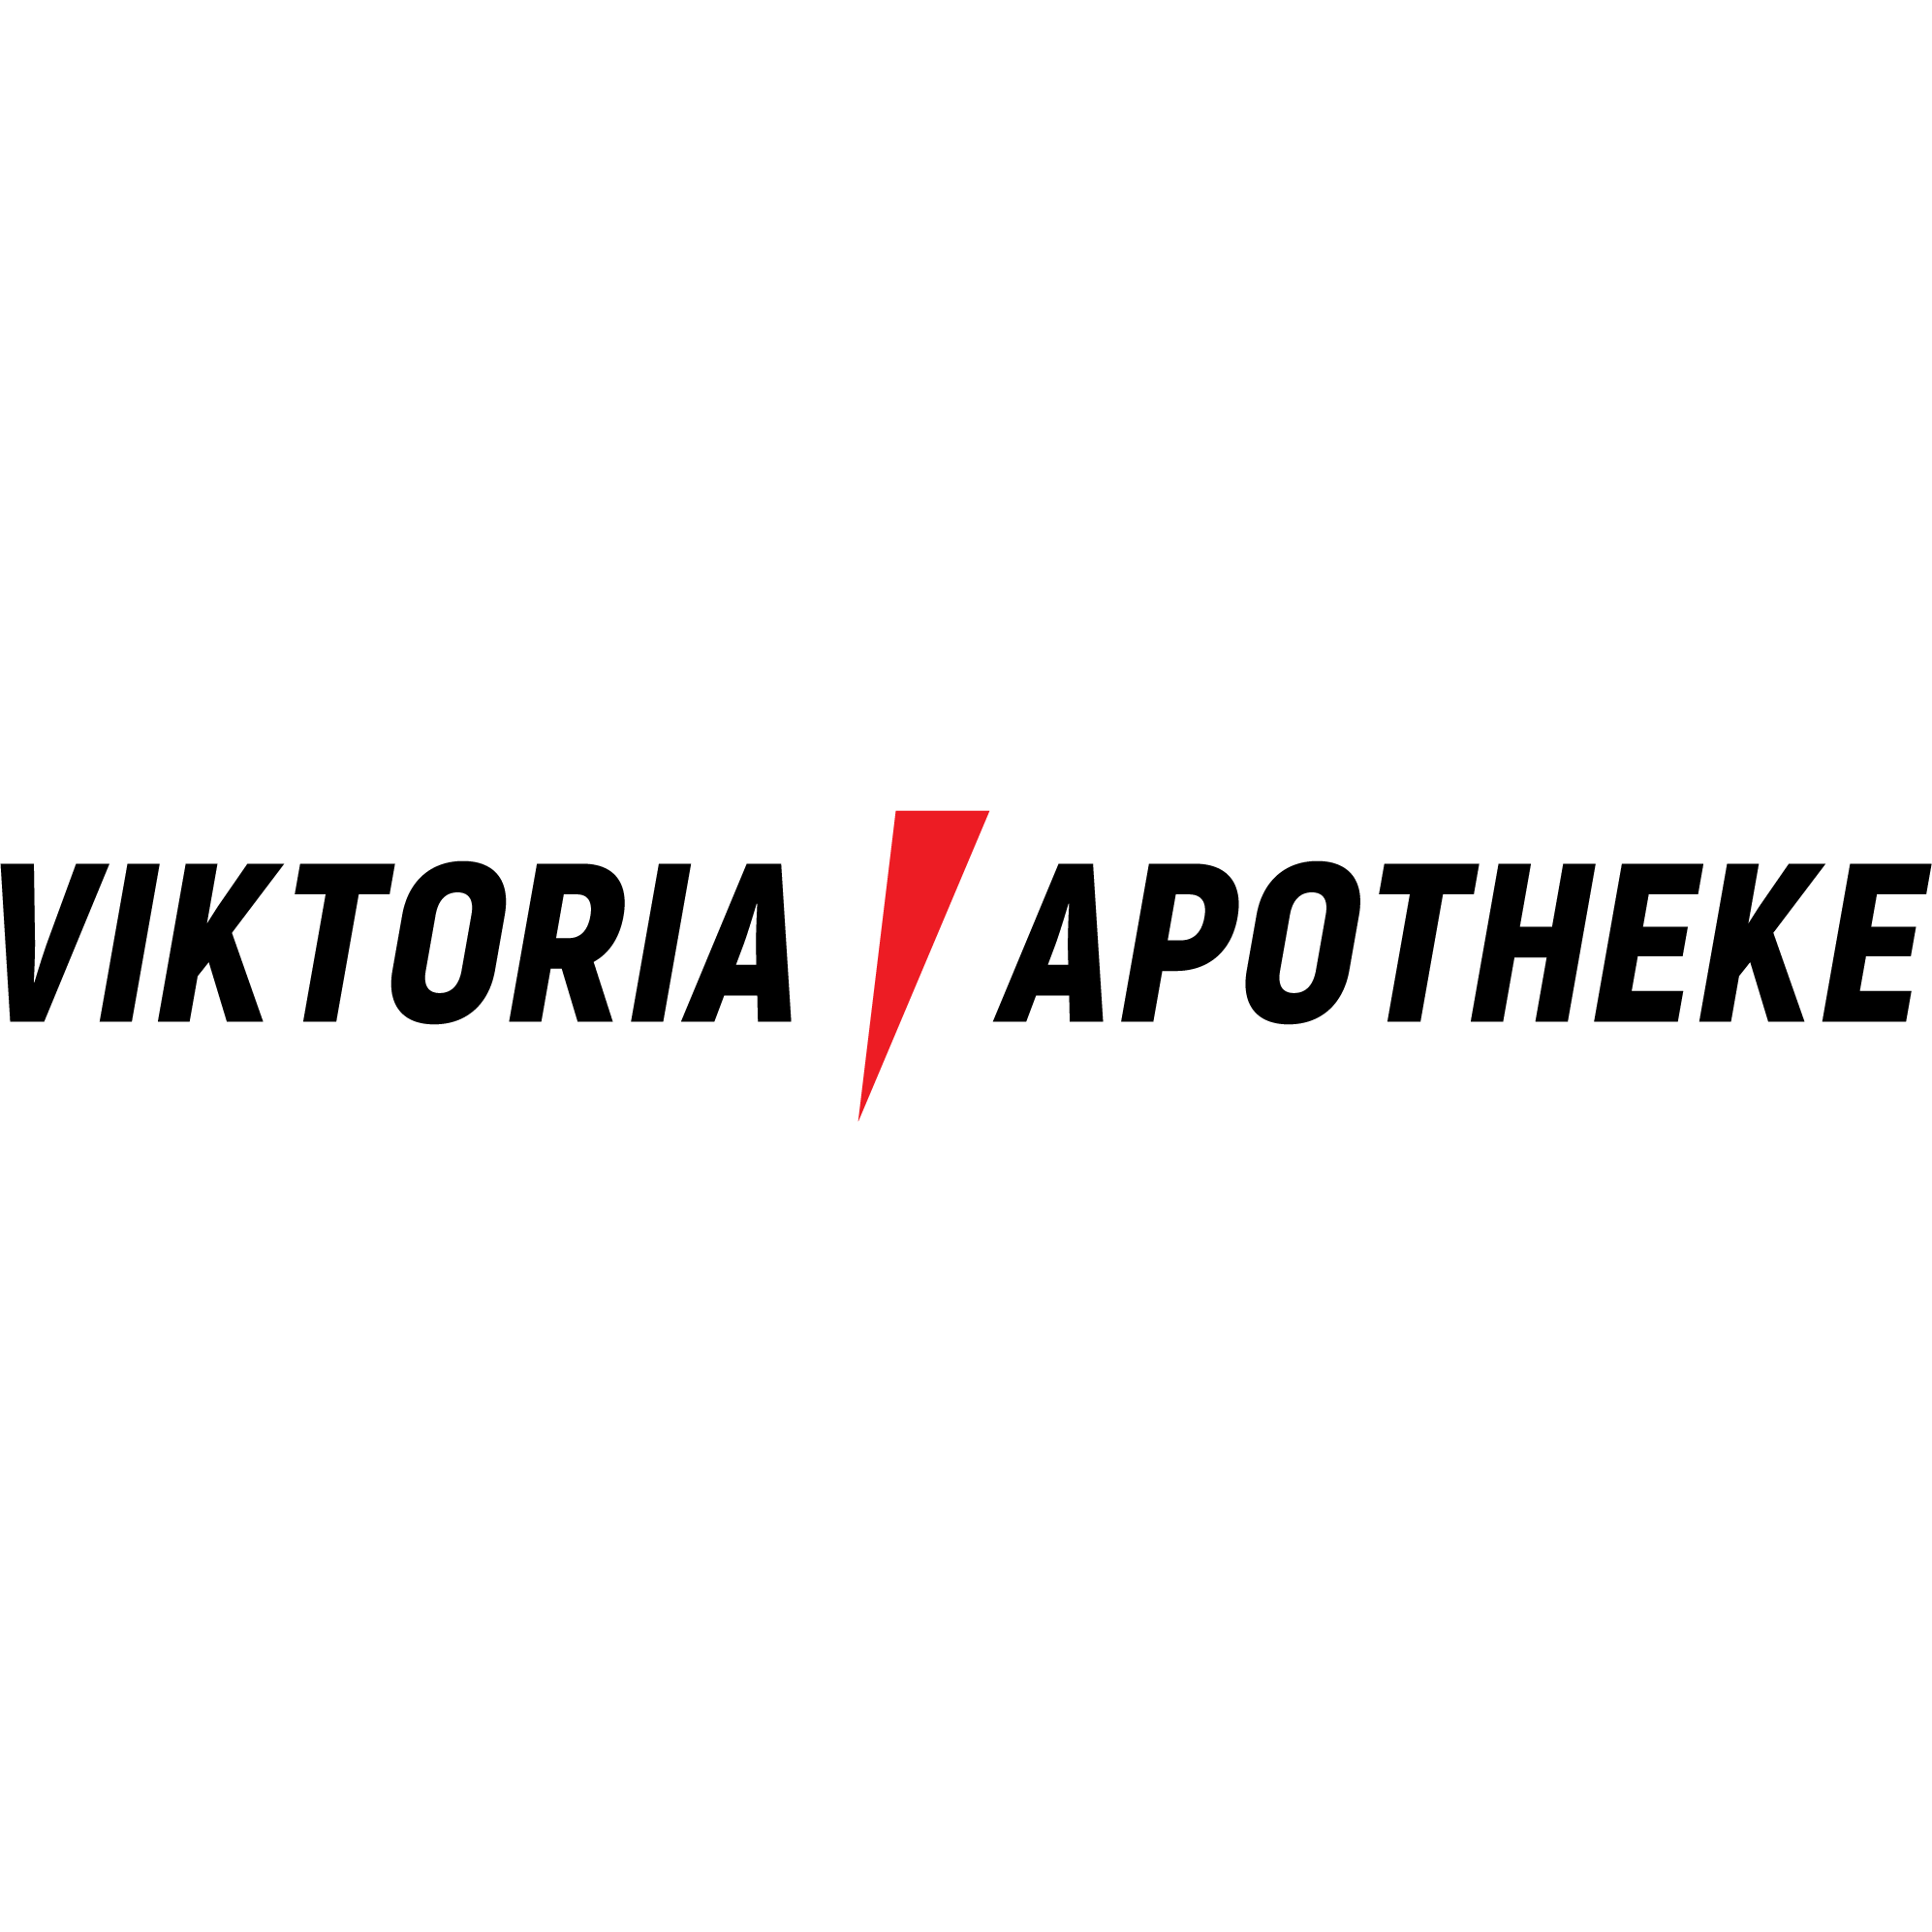 Viktoria-Apotheke in Offenbach am Main - Logo